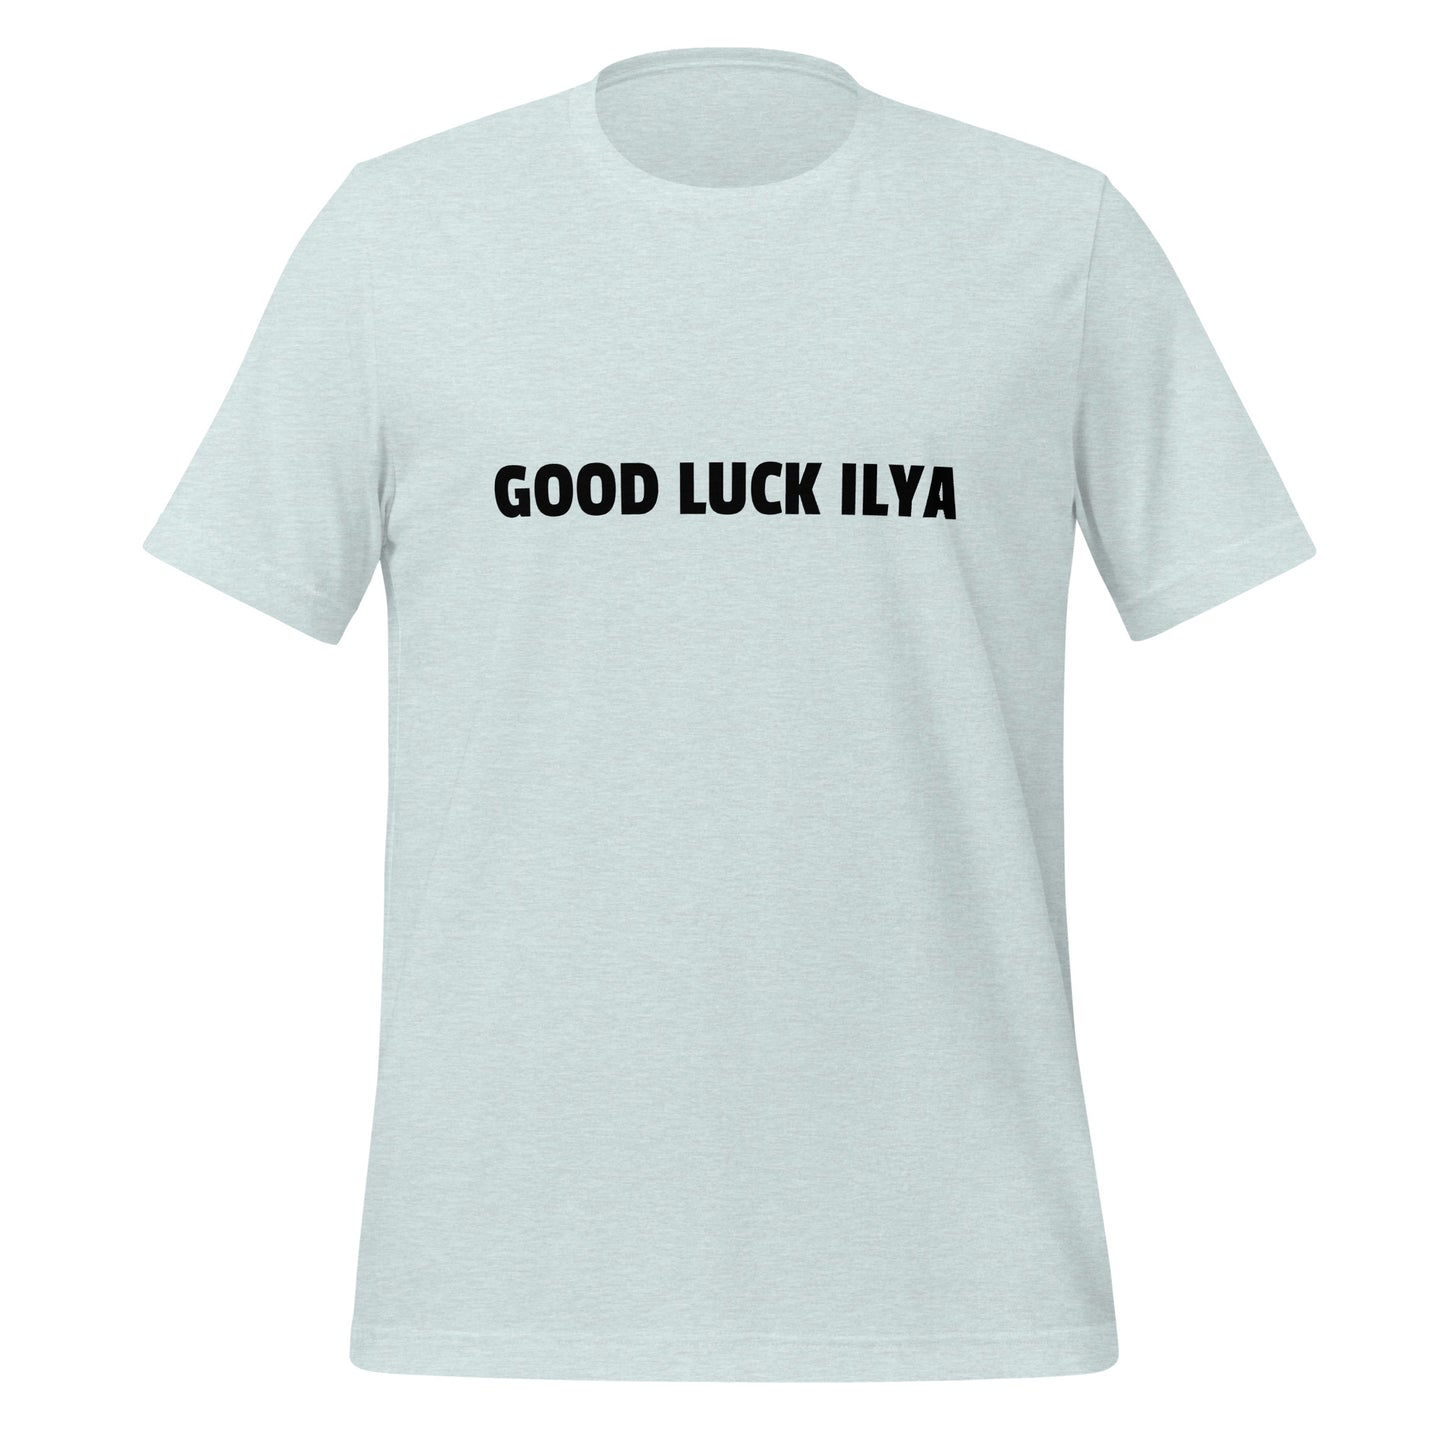 GOOD LUCK ILYA T - Shirt (unisex) - Heather Prism Ice Blue - AI Store